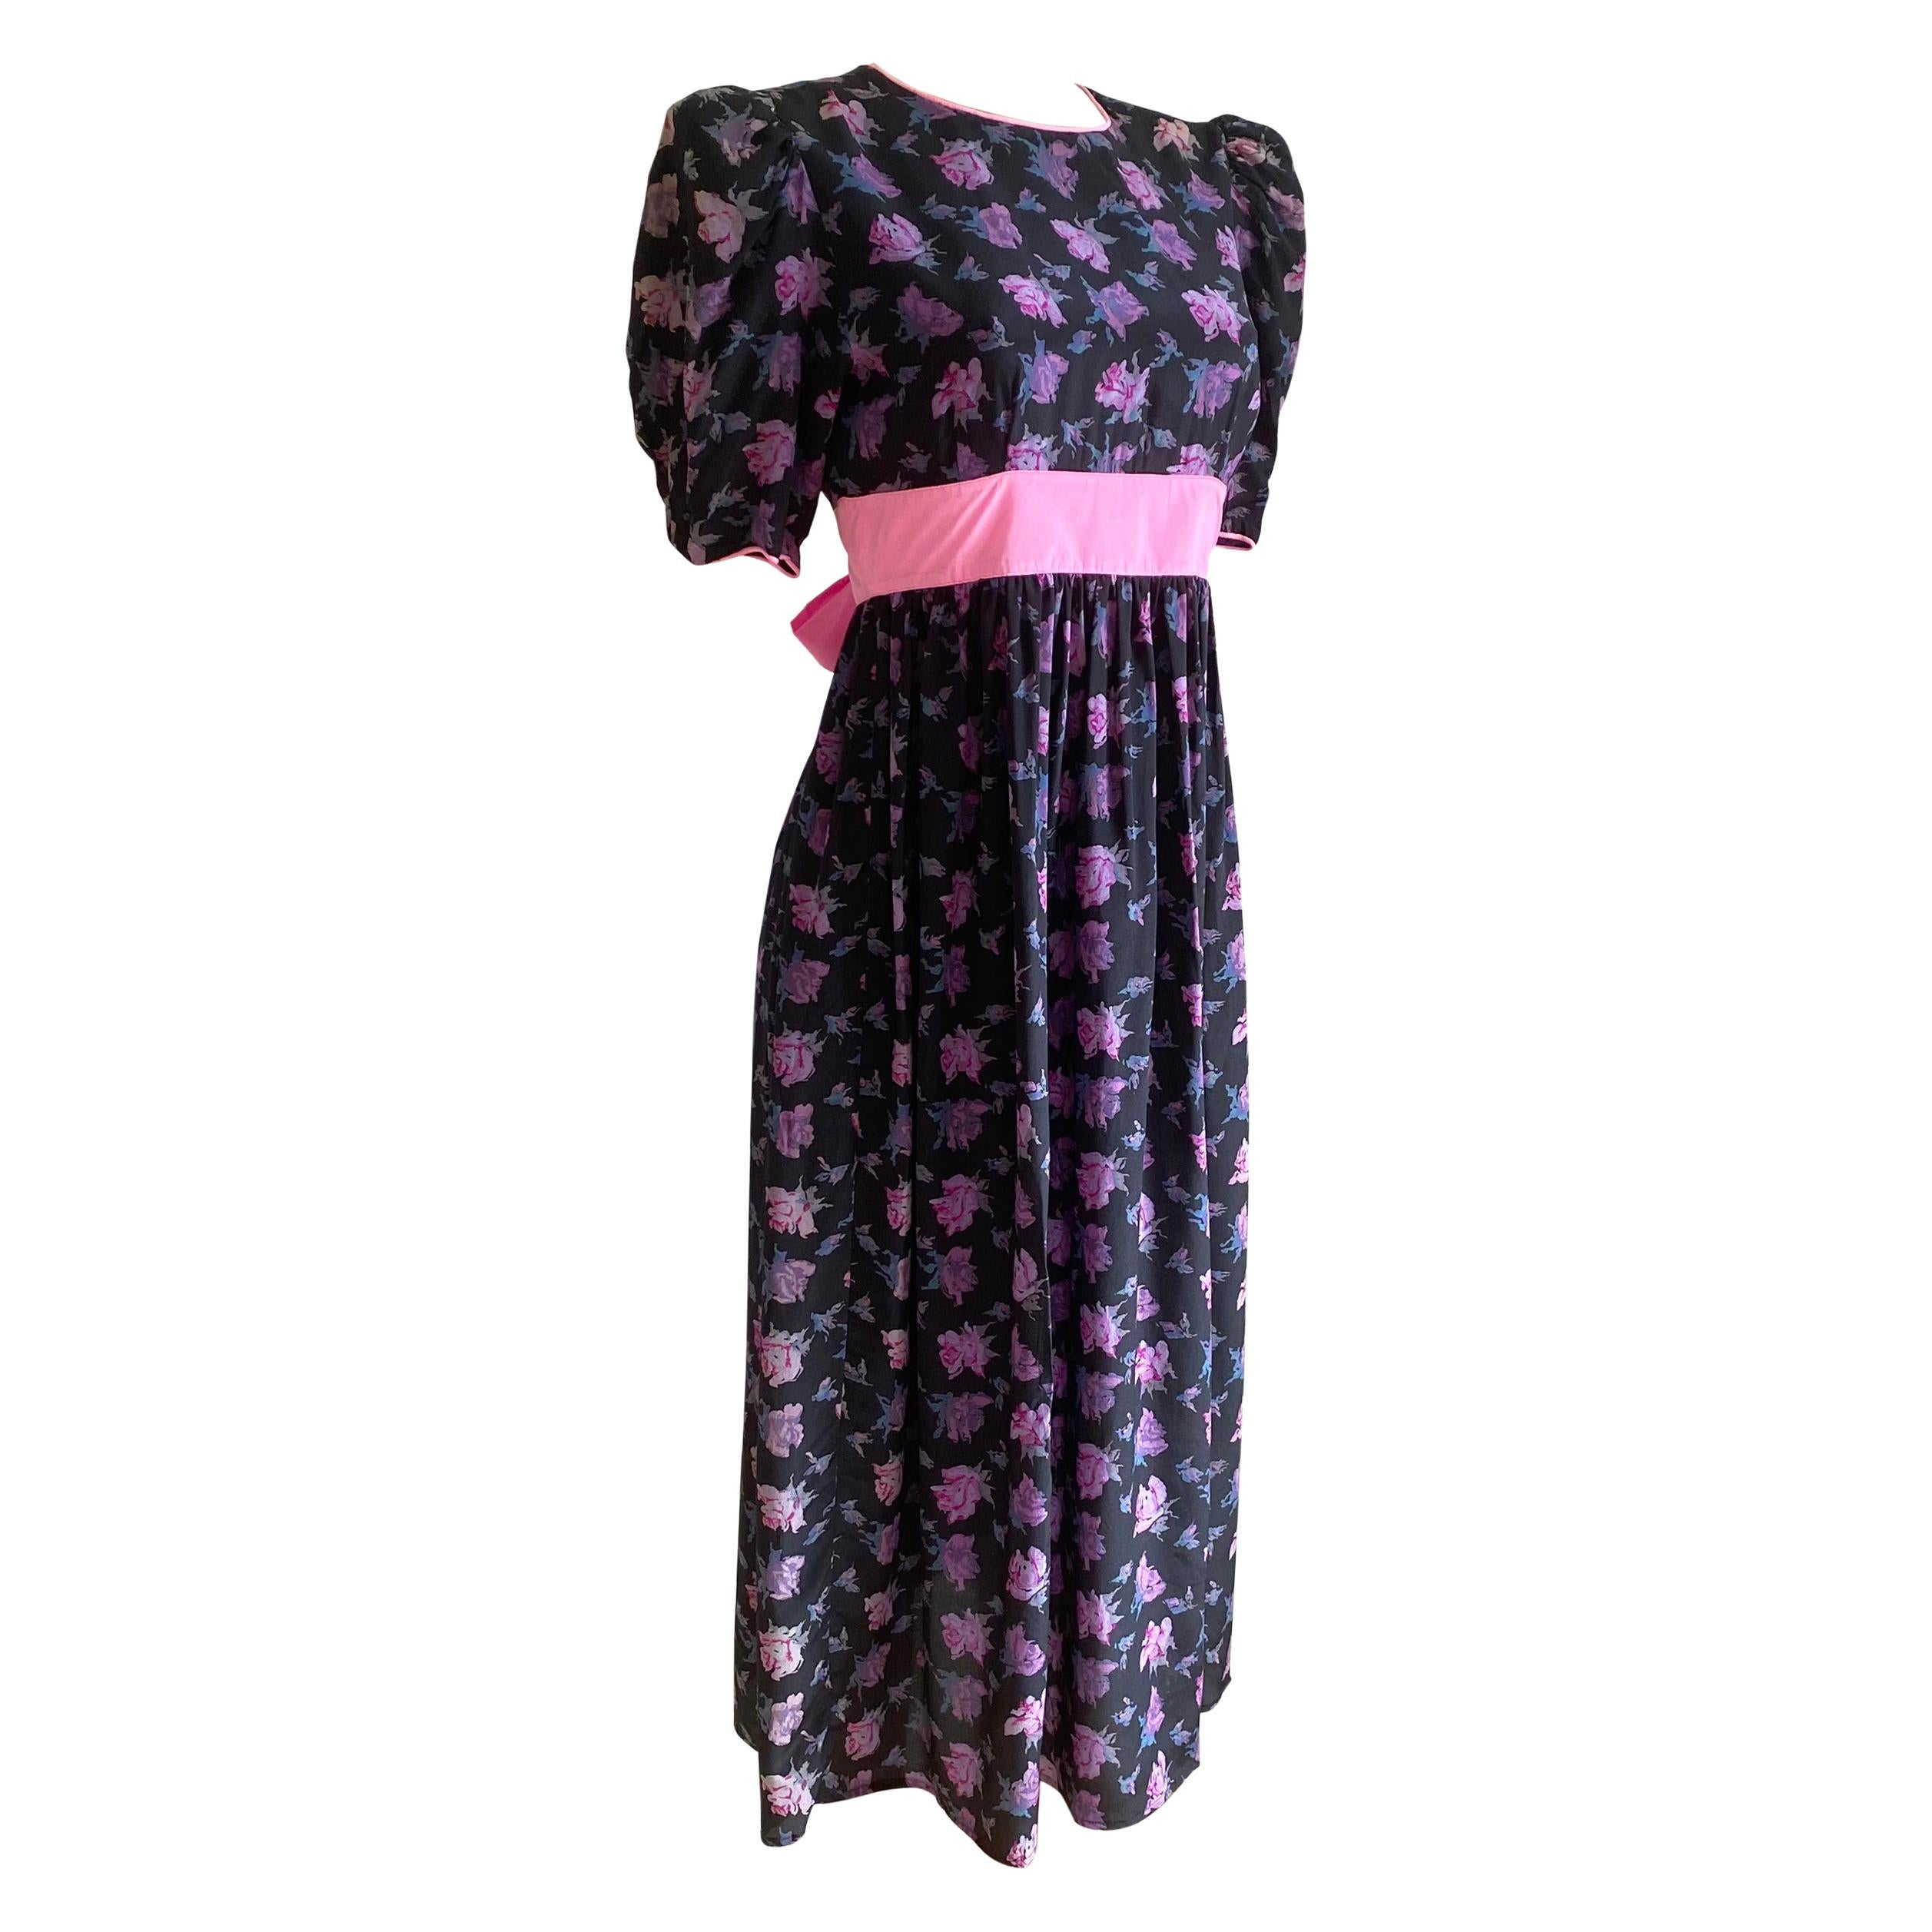 Pre-washed rosebud print black silk crepe FLORA KUNG princess dress